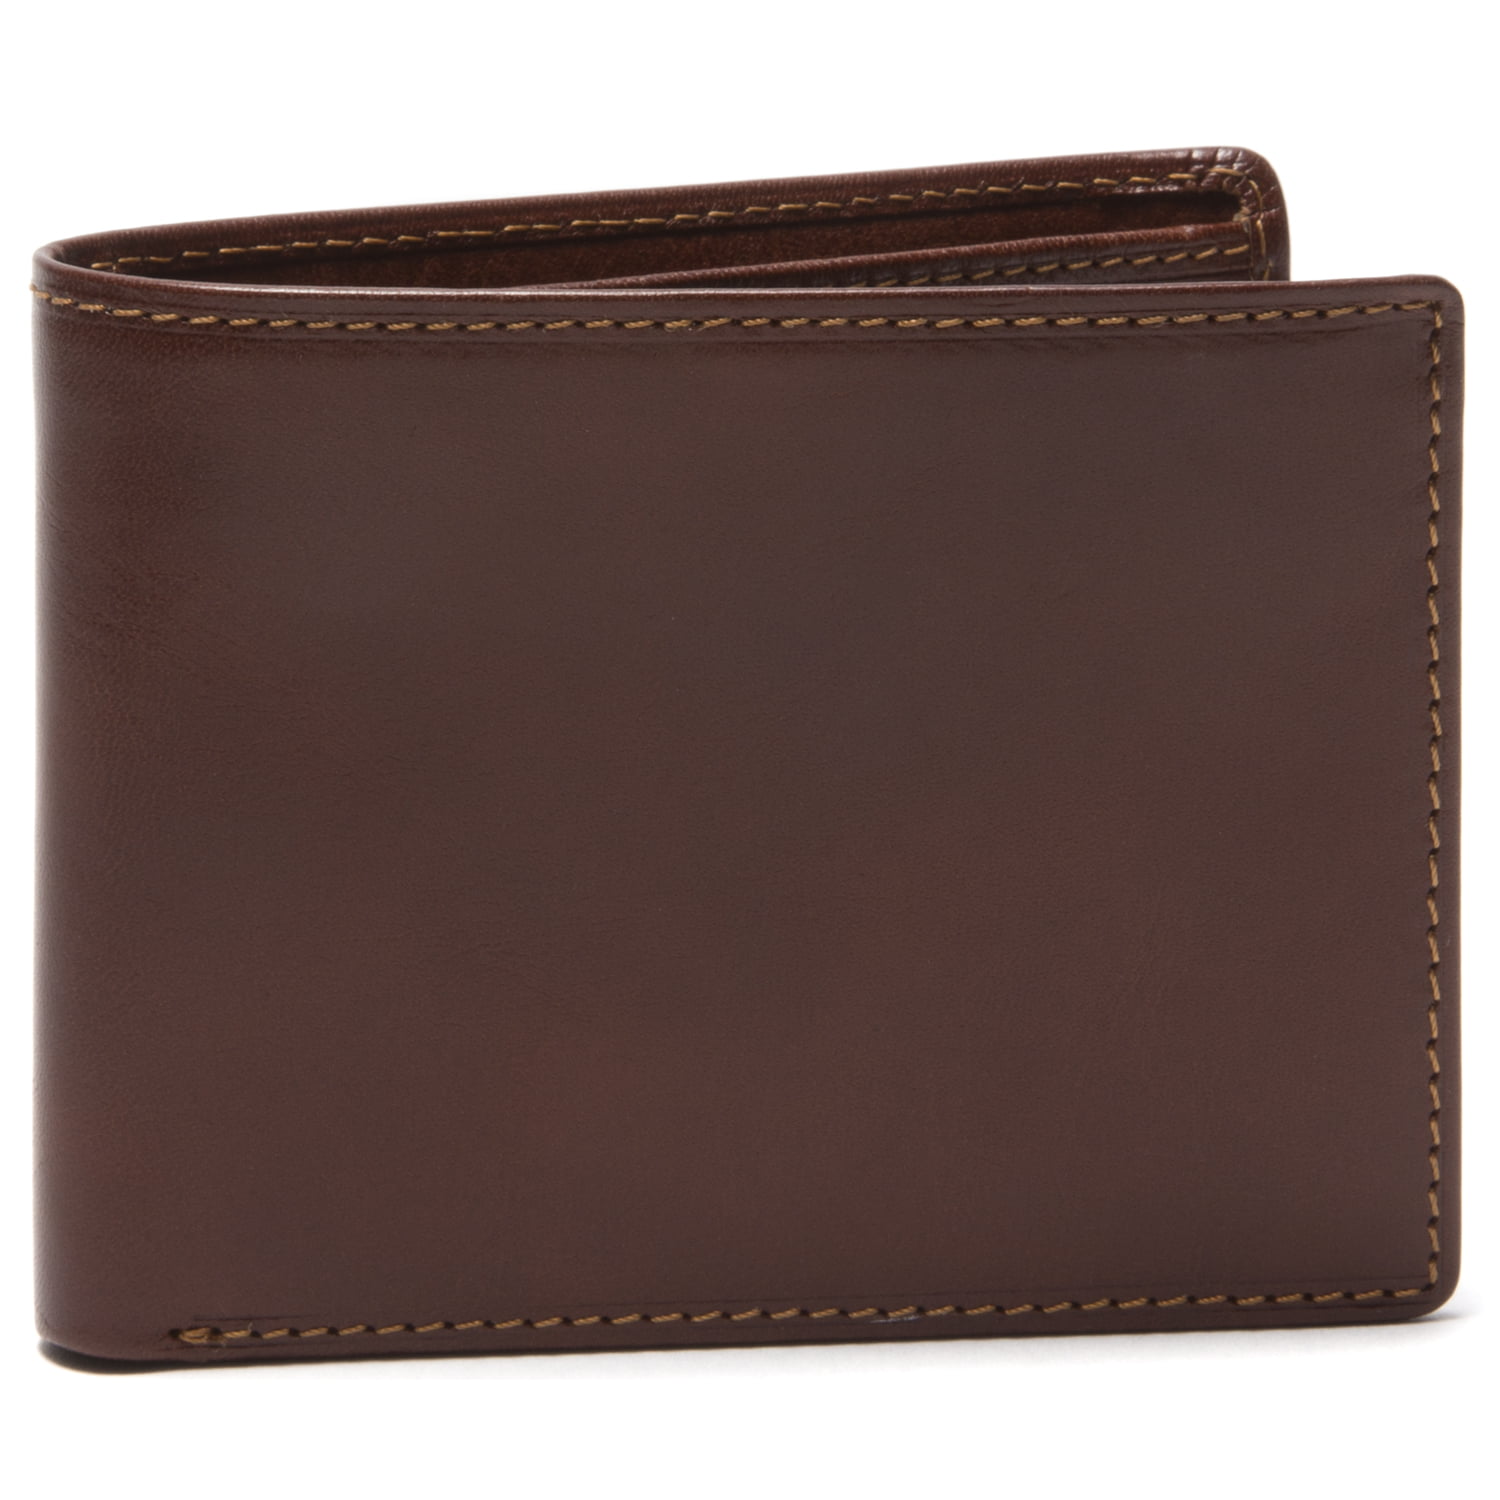 Tony Perotti Italian Leather Classic Bifold Wallet with ID Window Flap in Cognac 